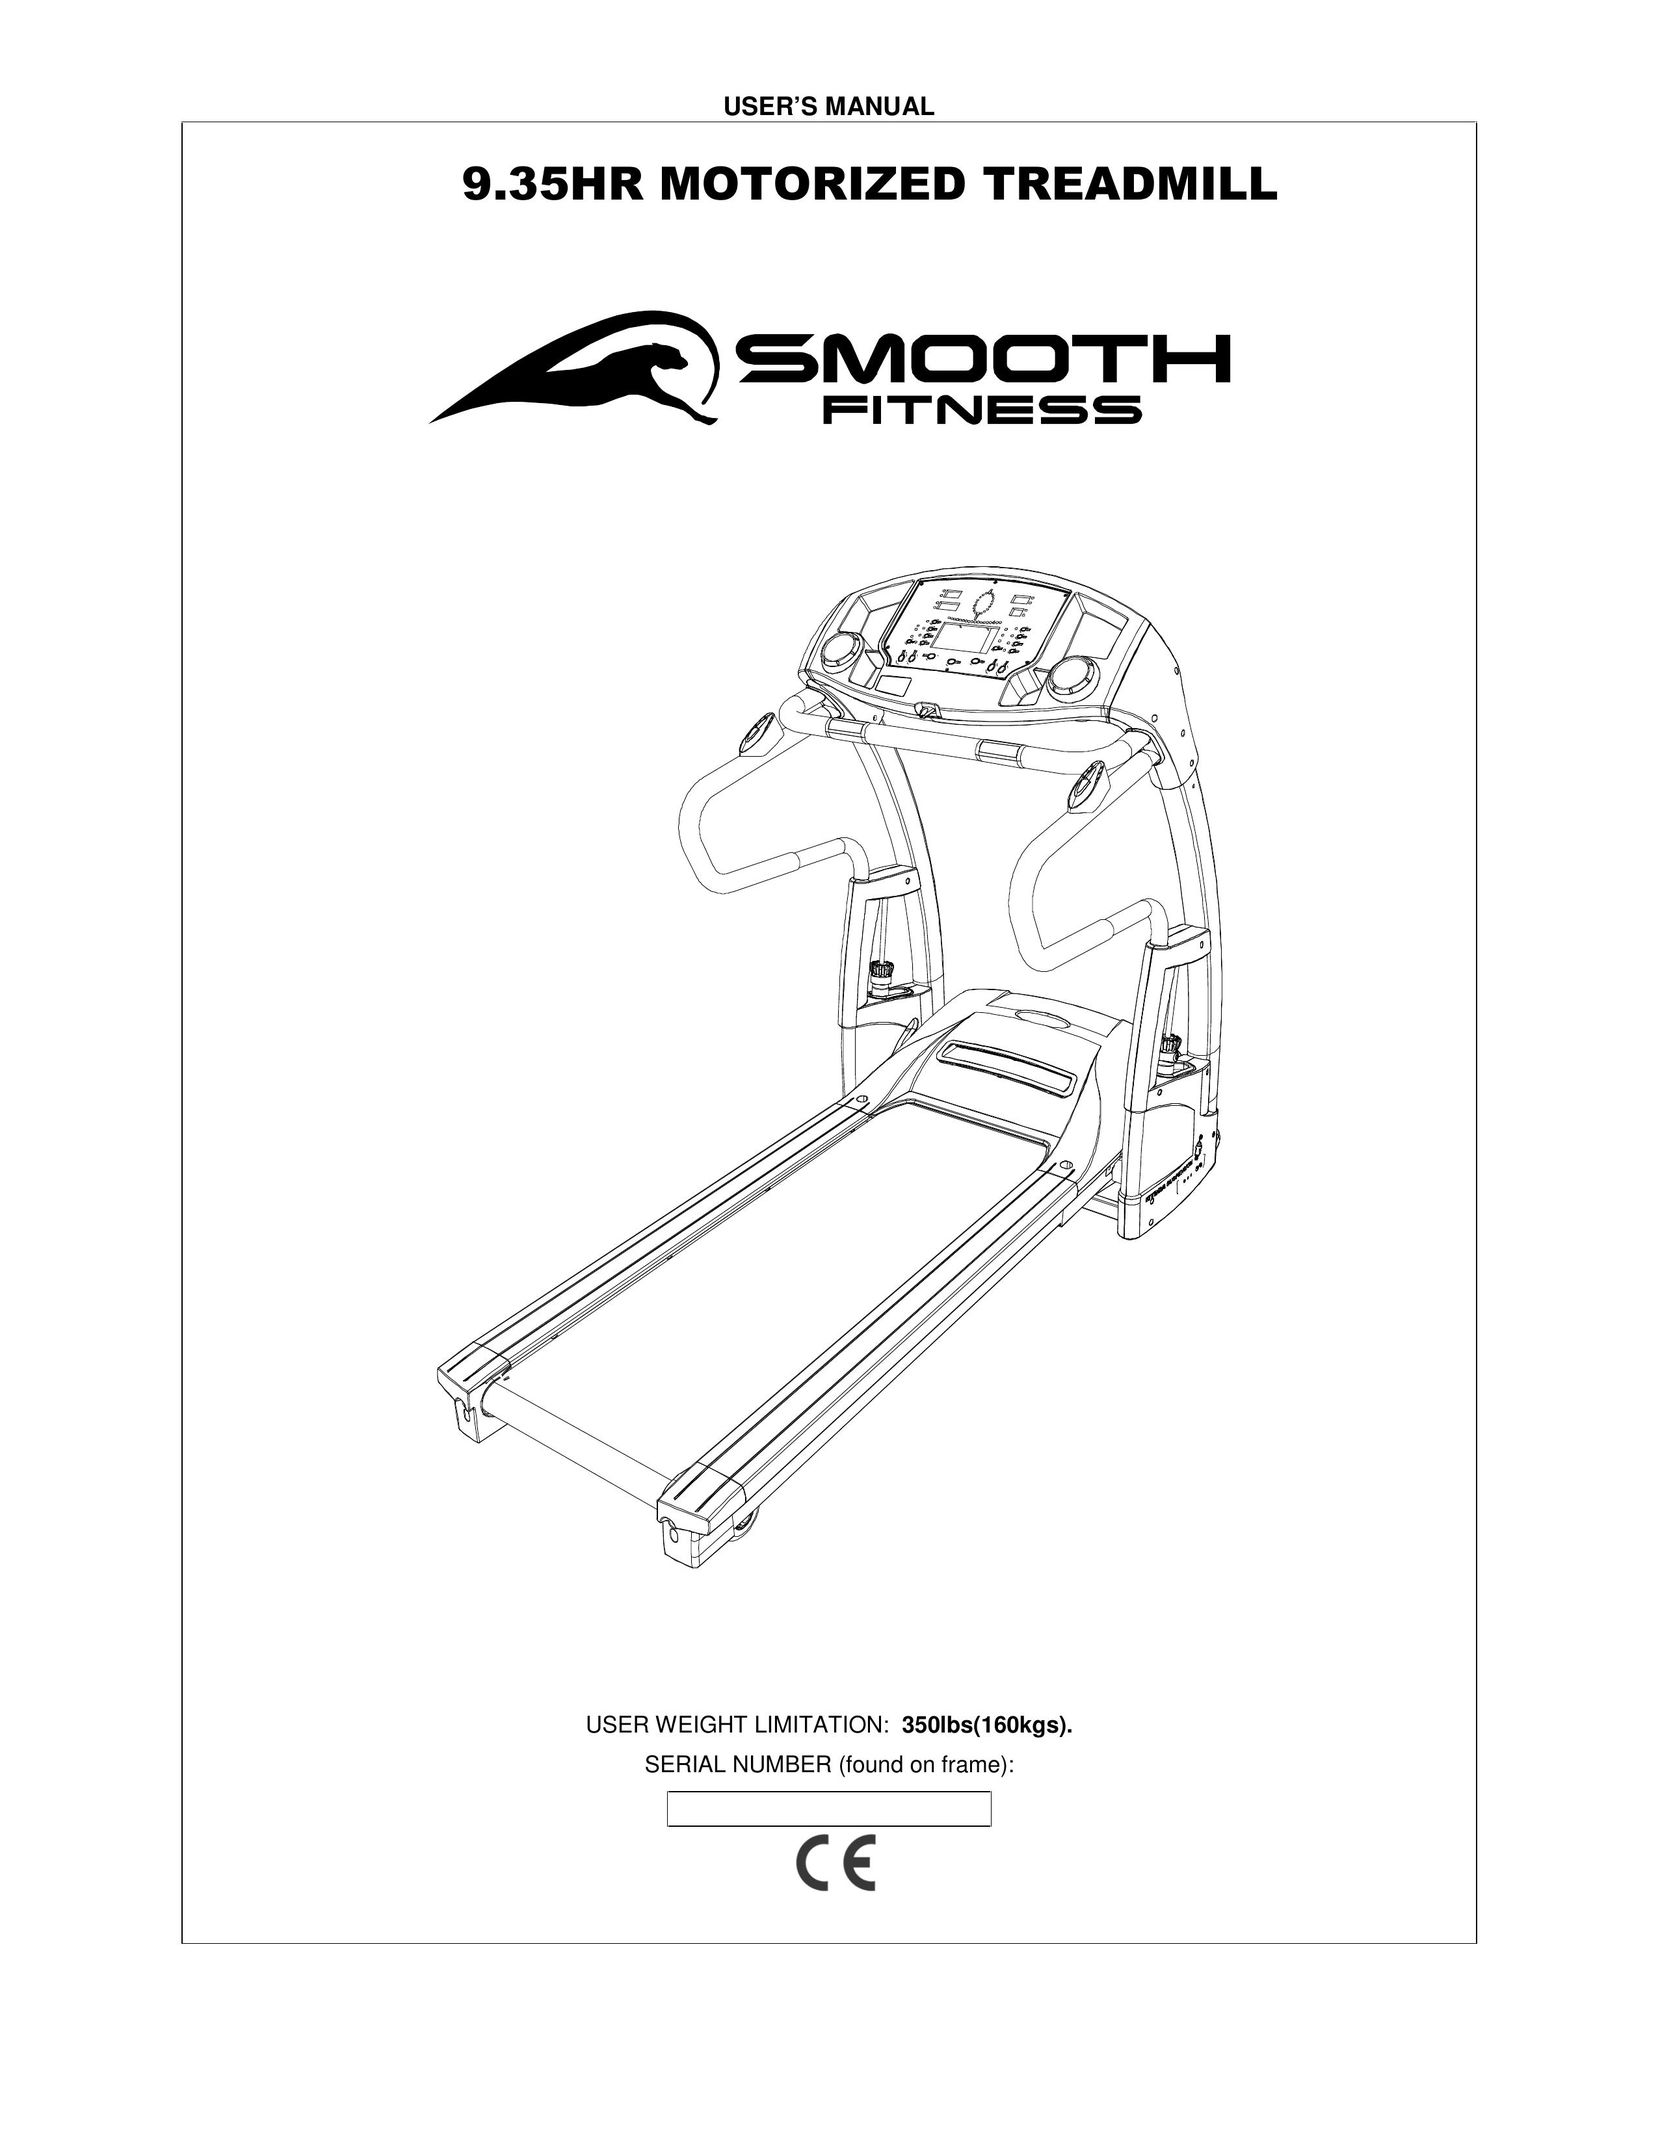 Smooth Fitness 9.35HR Treadmill User Manual